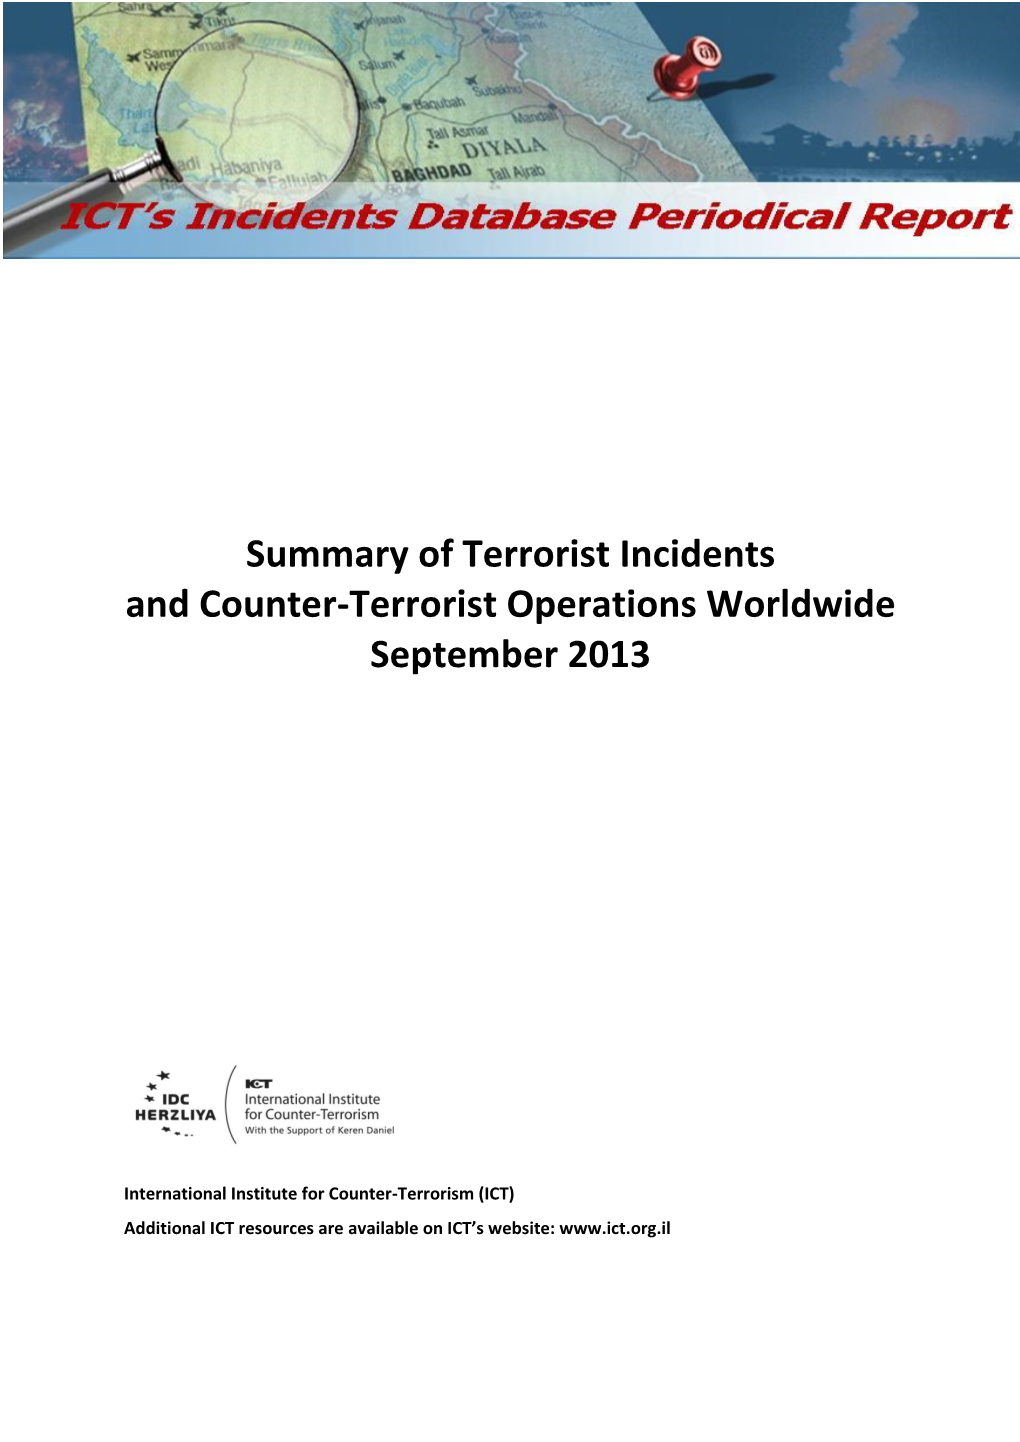 Summary of Terrorist Incidents and Counter-Terrorist Operations Worldwide September 2013